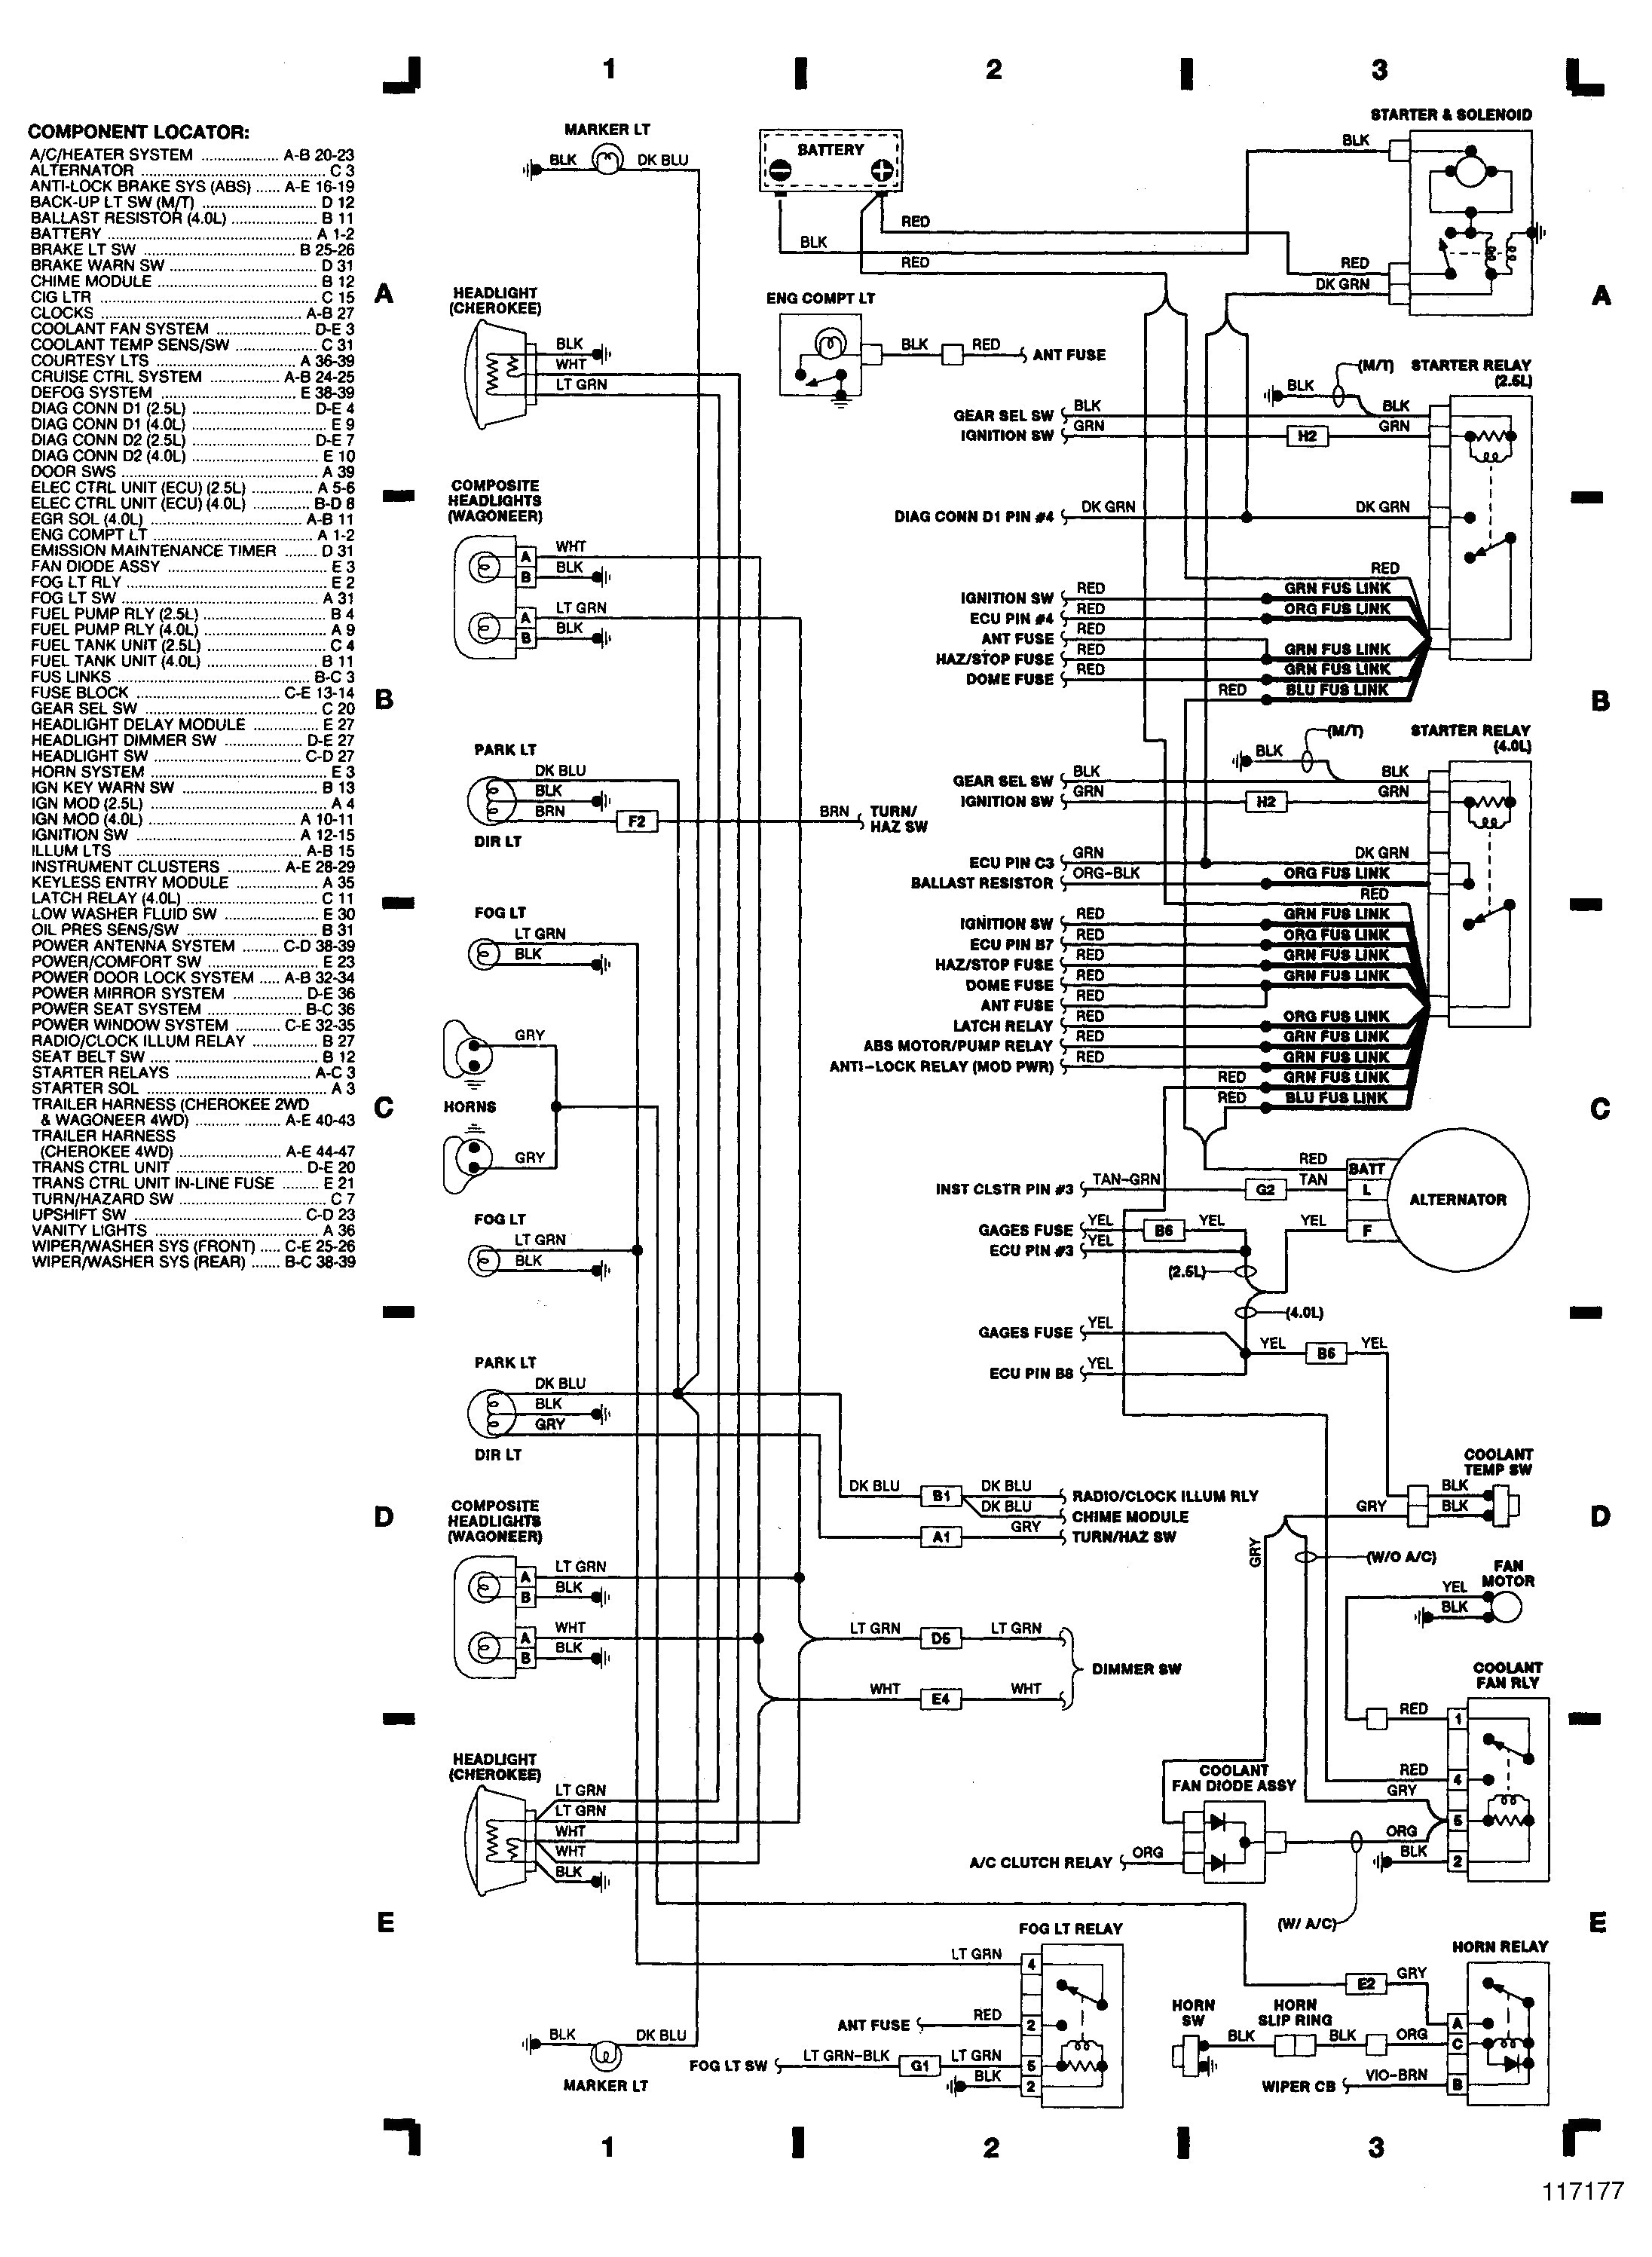 1989jeepcherokeetransmissiondiagram 2002 jeep grand cherokee 2004 jeep grand cherokee rear axle diagram free download wiring